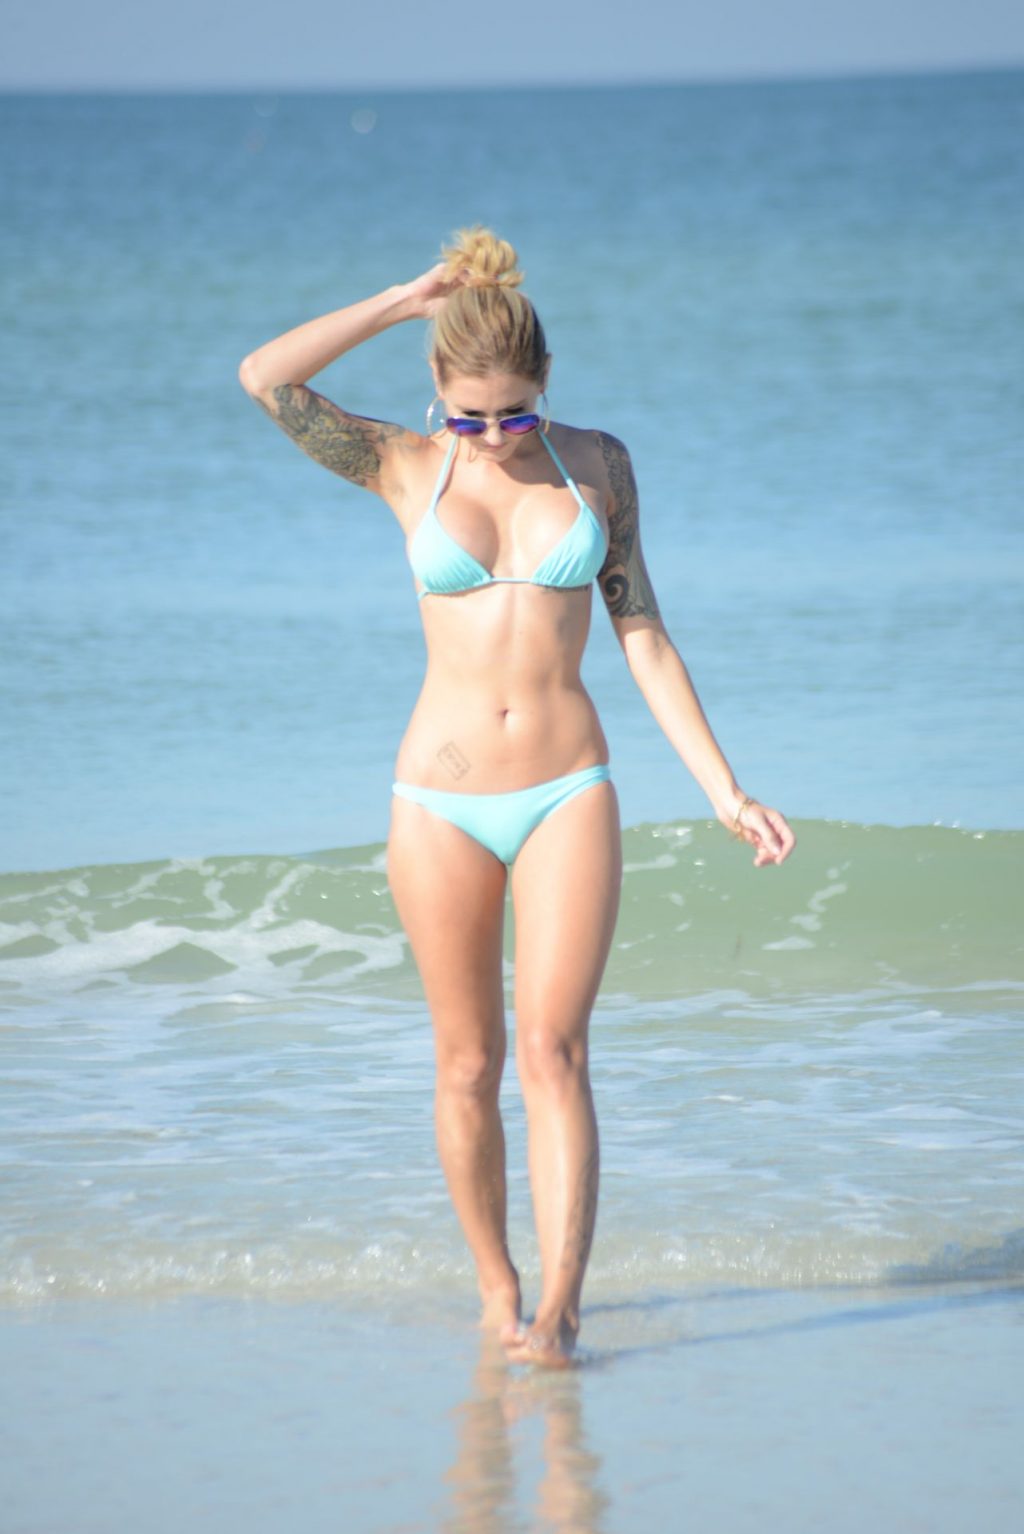 Reagan Lush Displays Her Sexy Body on the Beach (25 Photos)